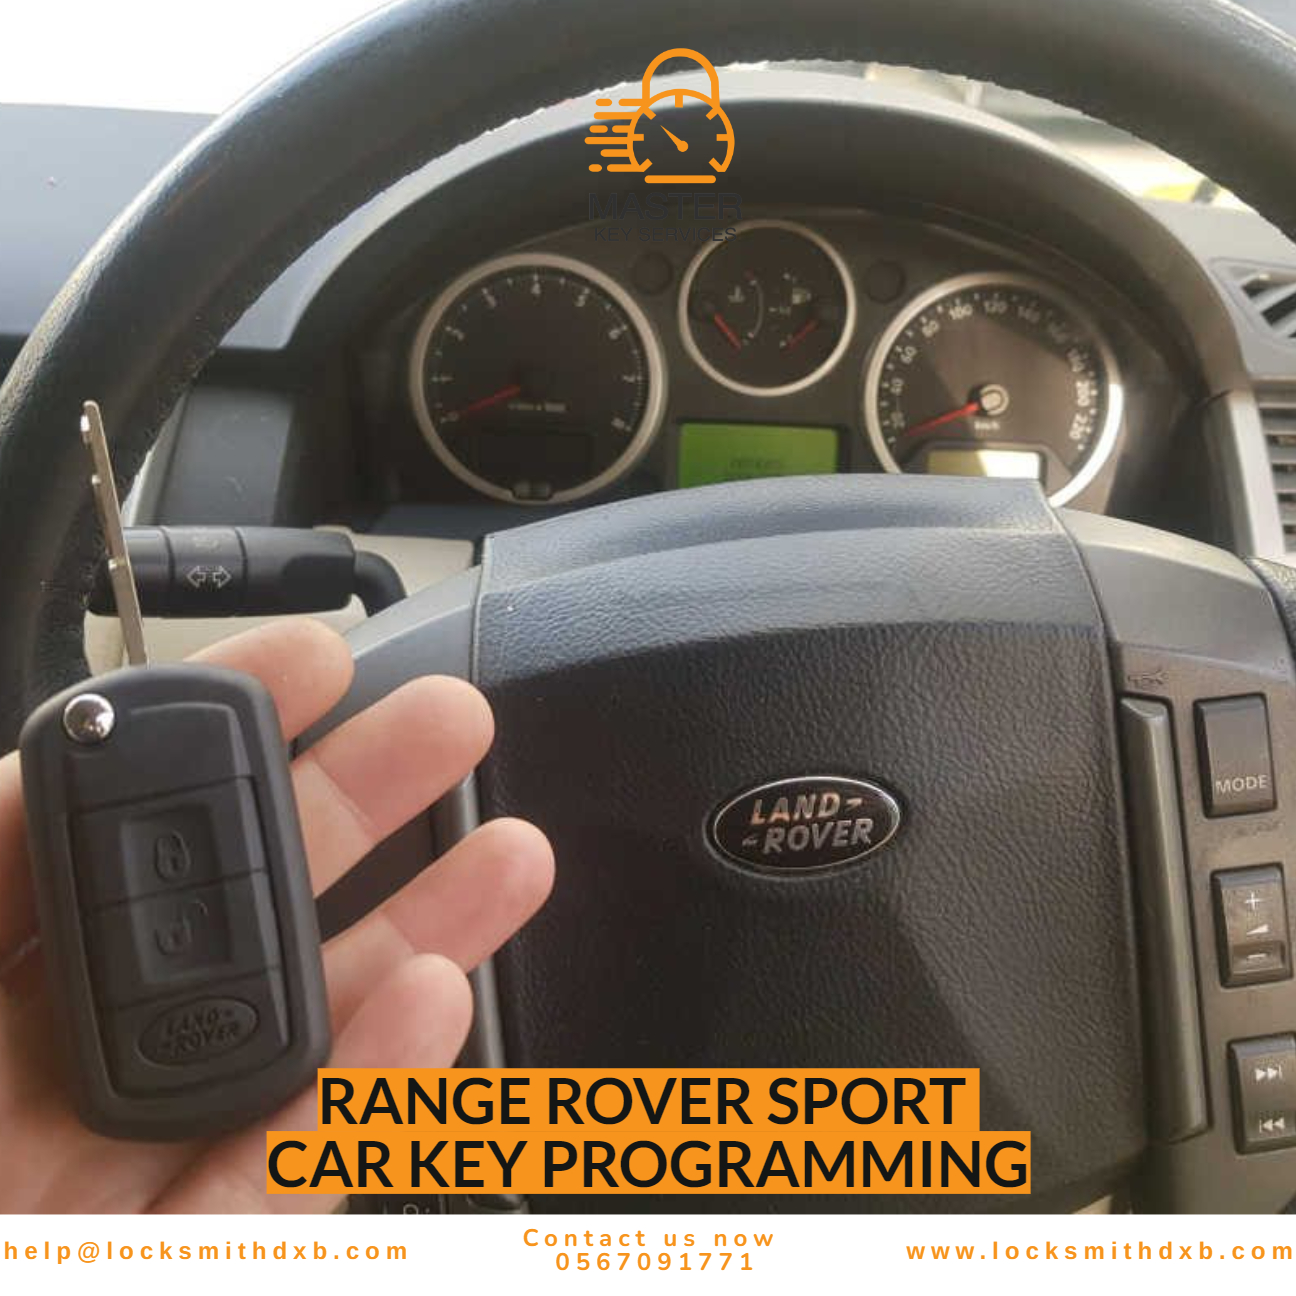 Range Rover Sport car key programming